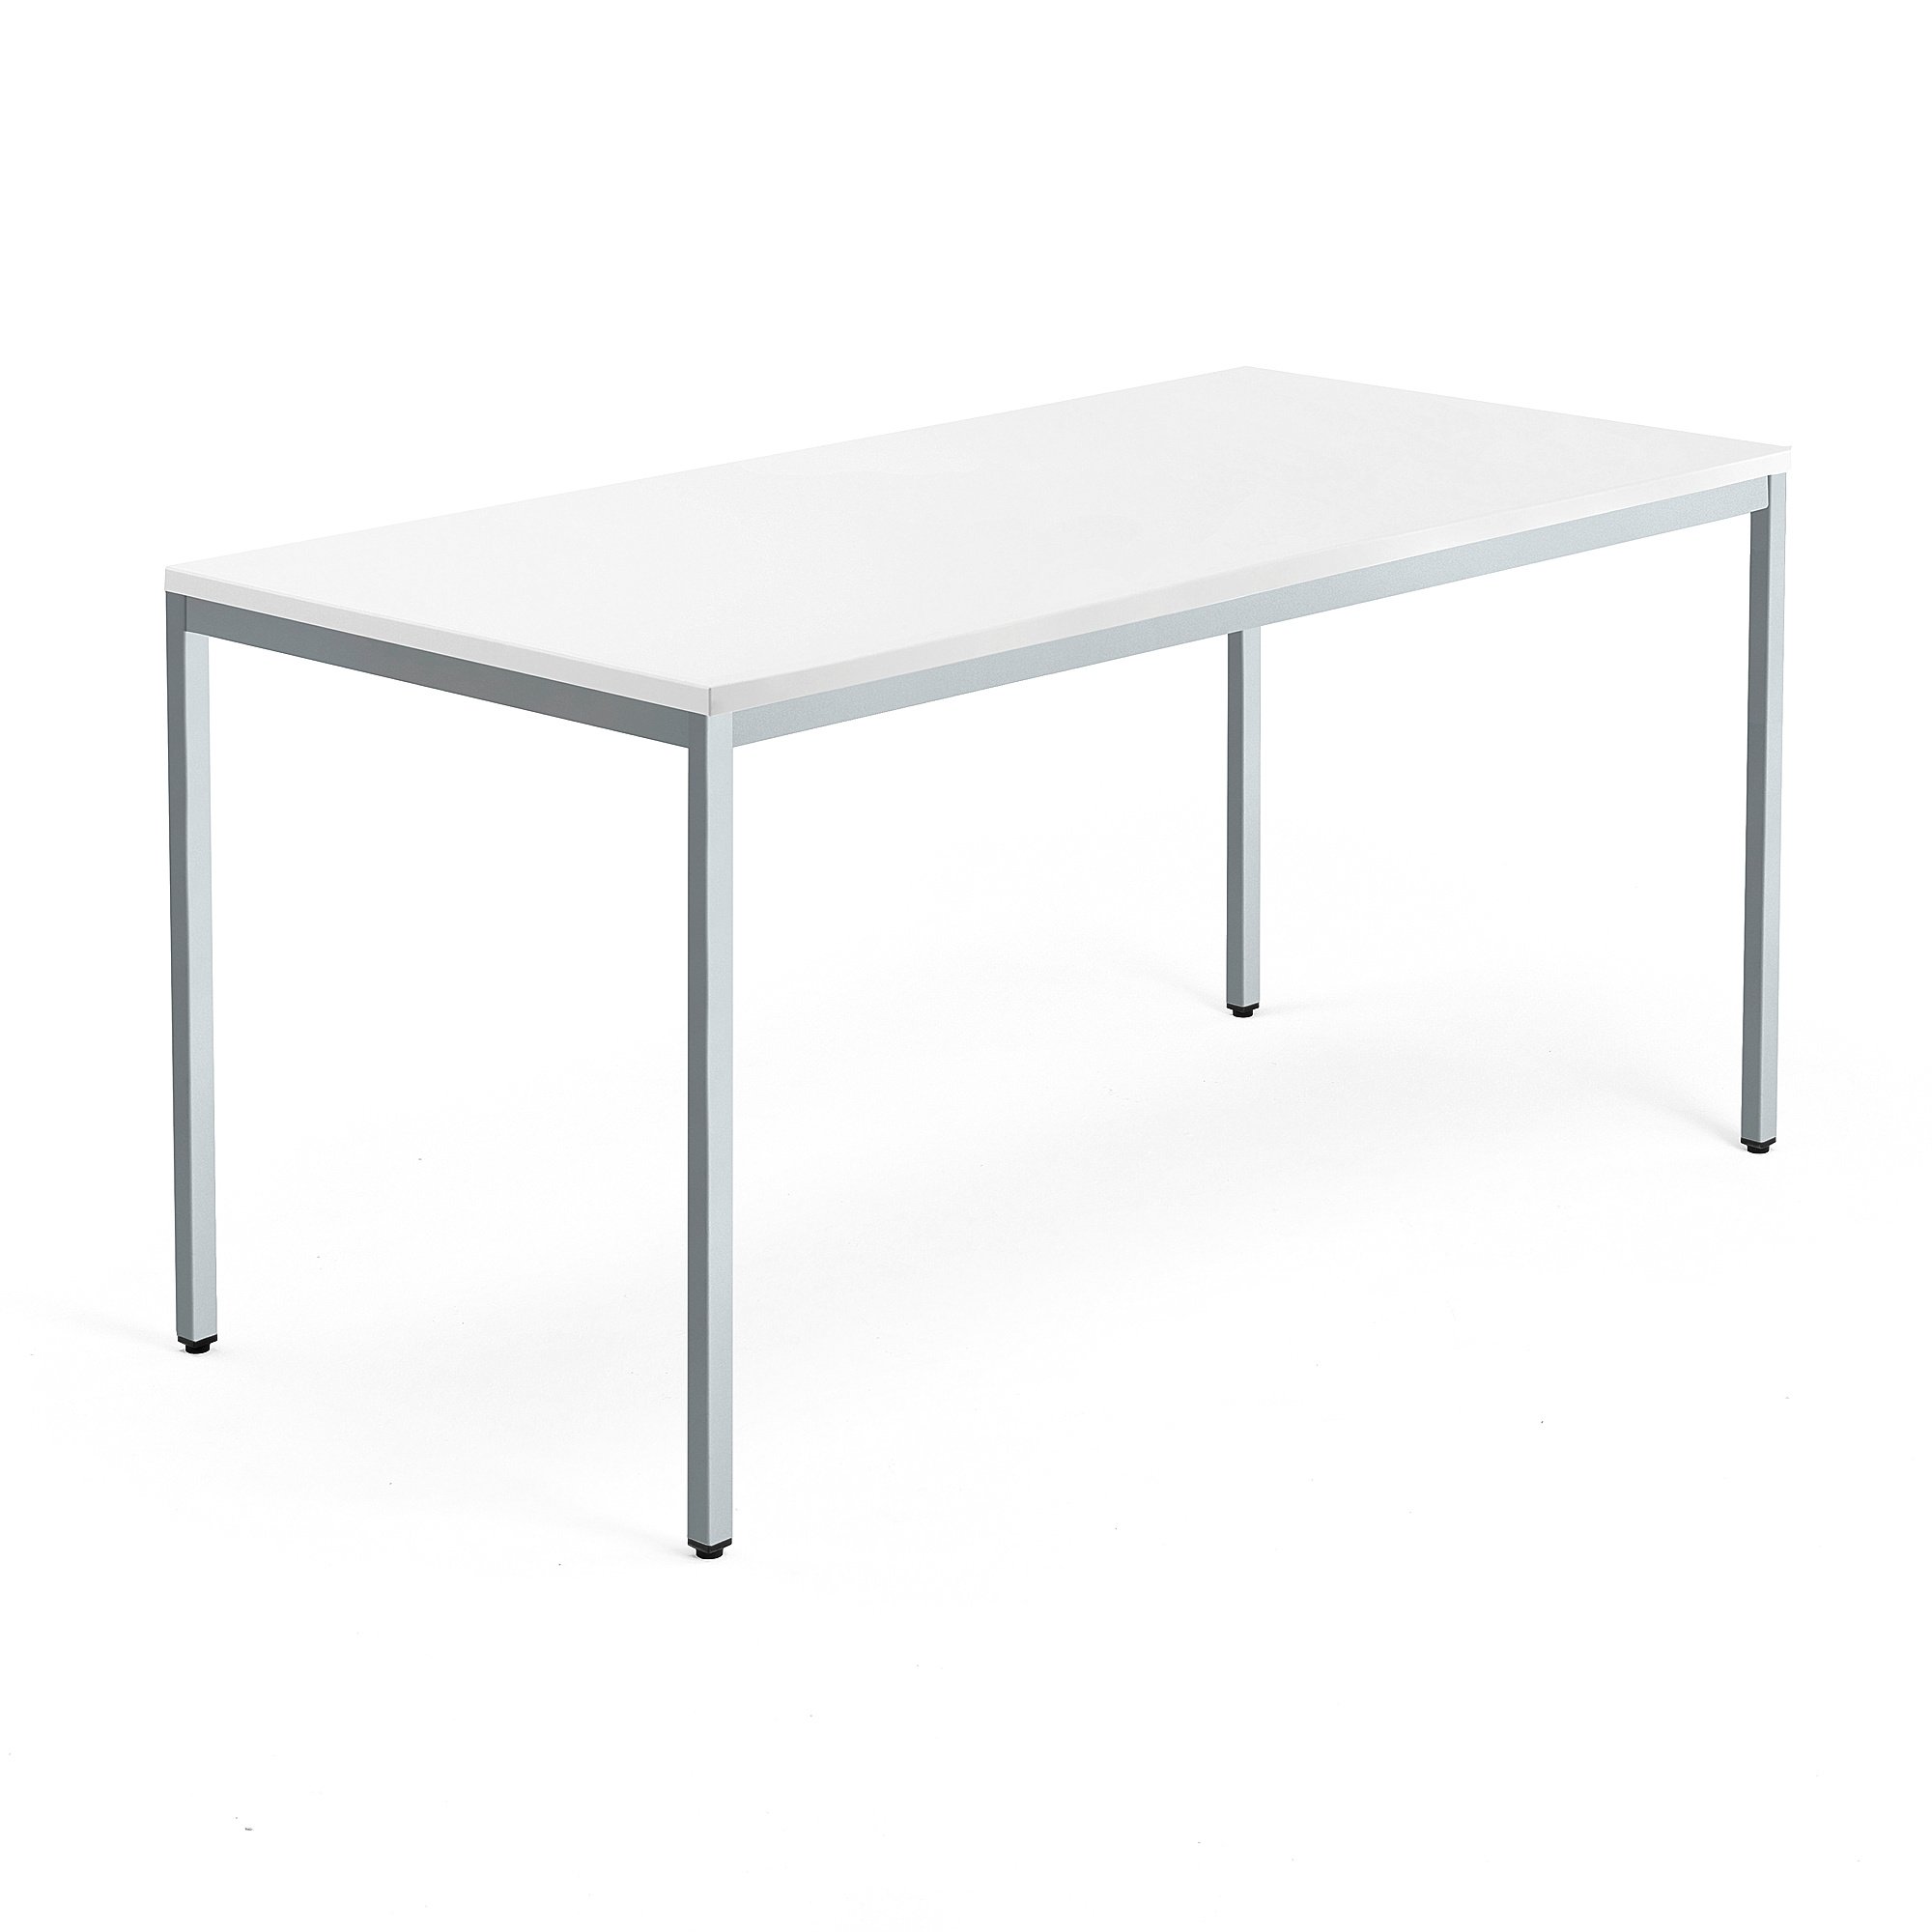 Psací stůl MODULUS, 4 nohy, 1600x800 mm, stříbrný rám, bílá